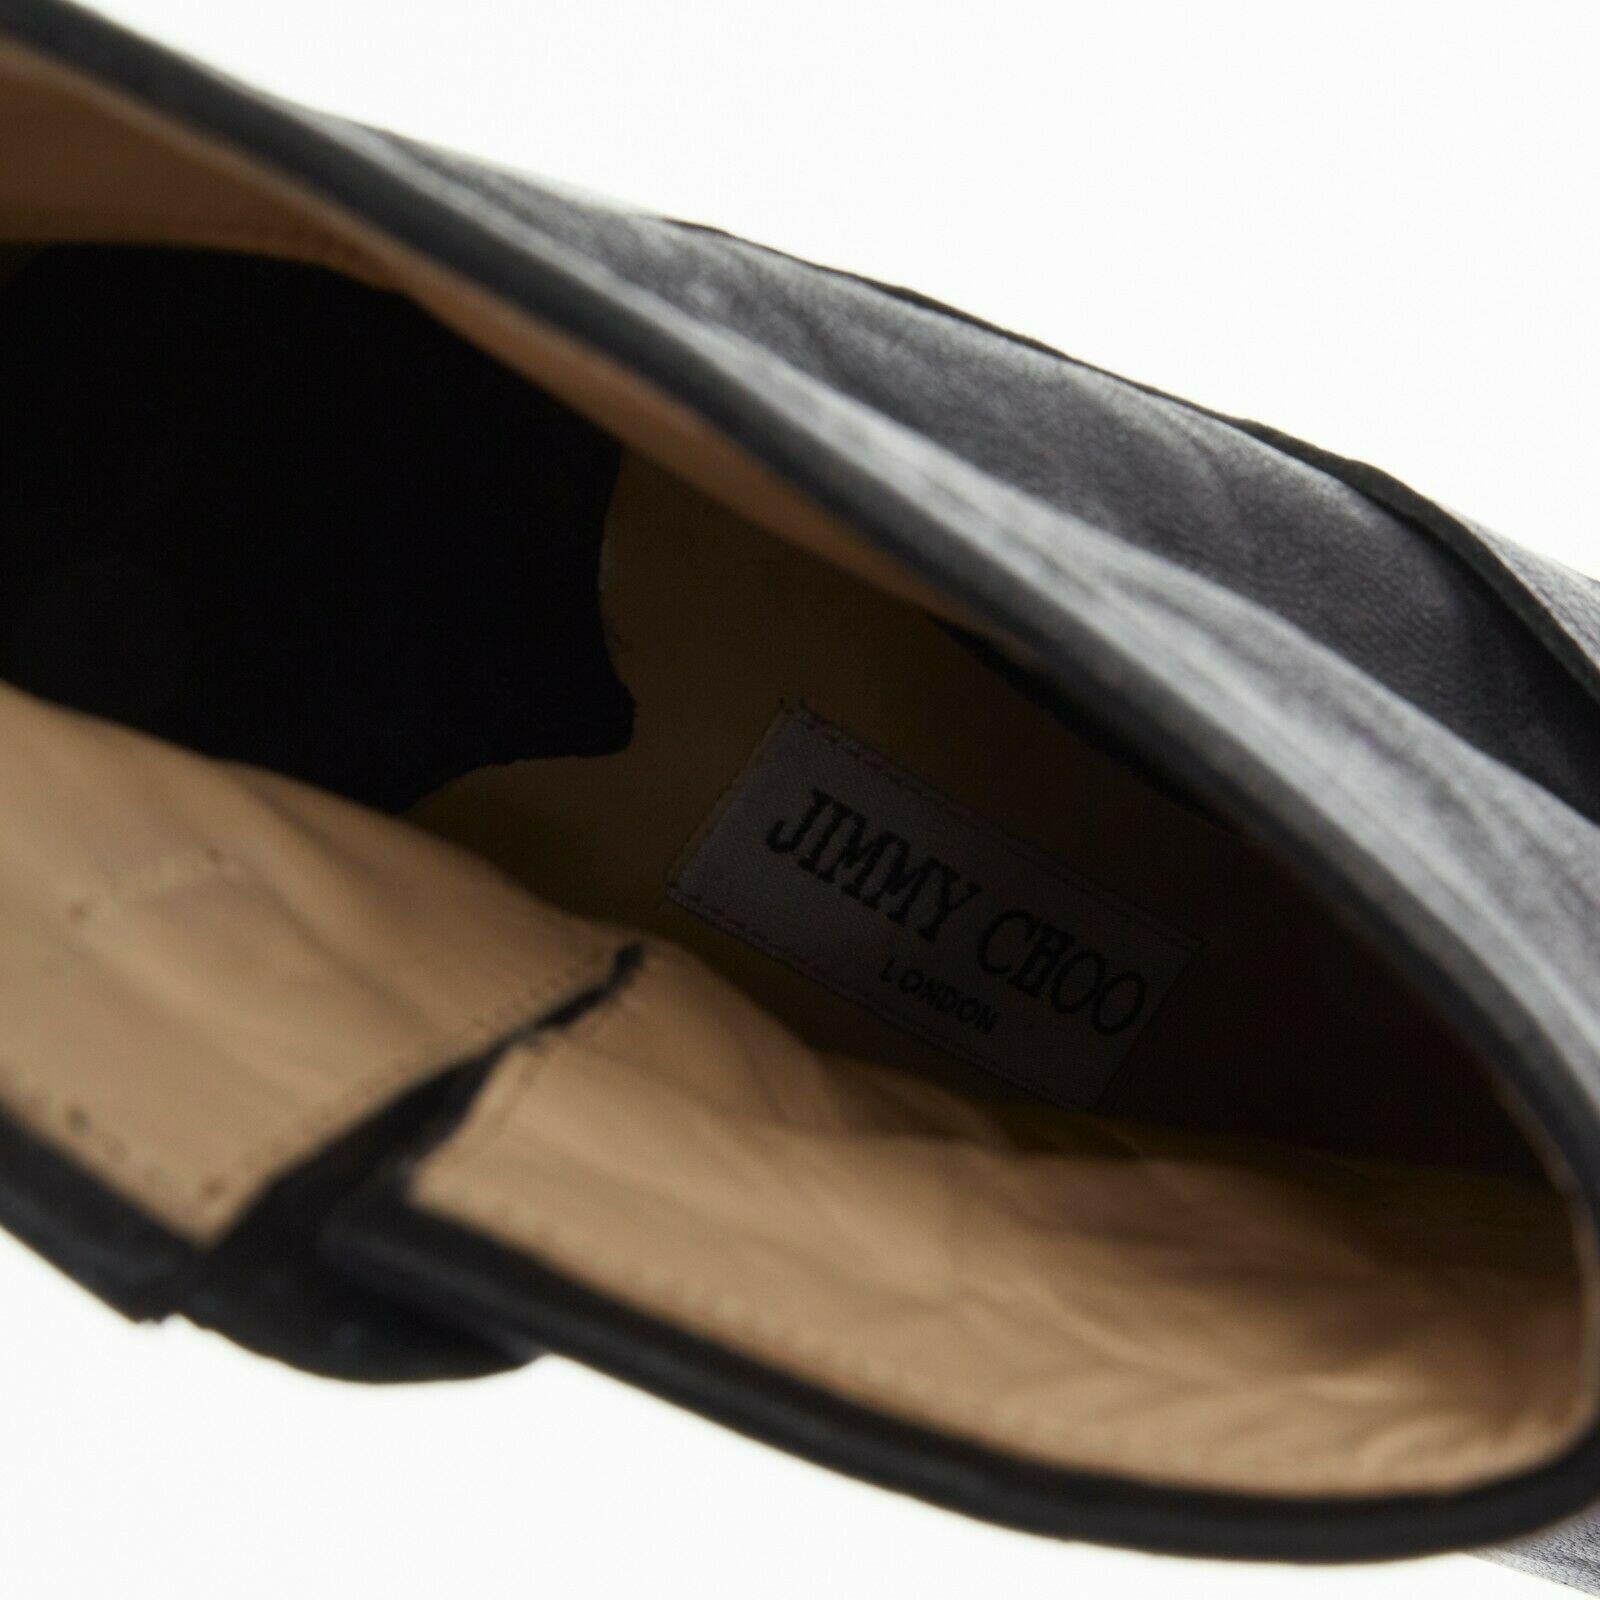 new JIMMY CHOO black leather peep toe wooden platform buckled ankle boots EU39 4